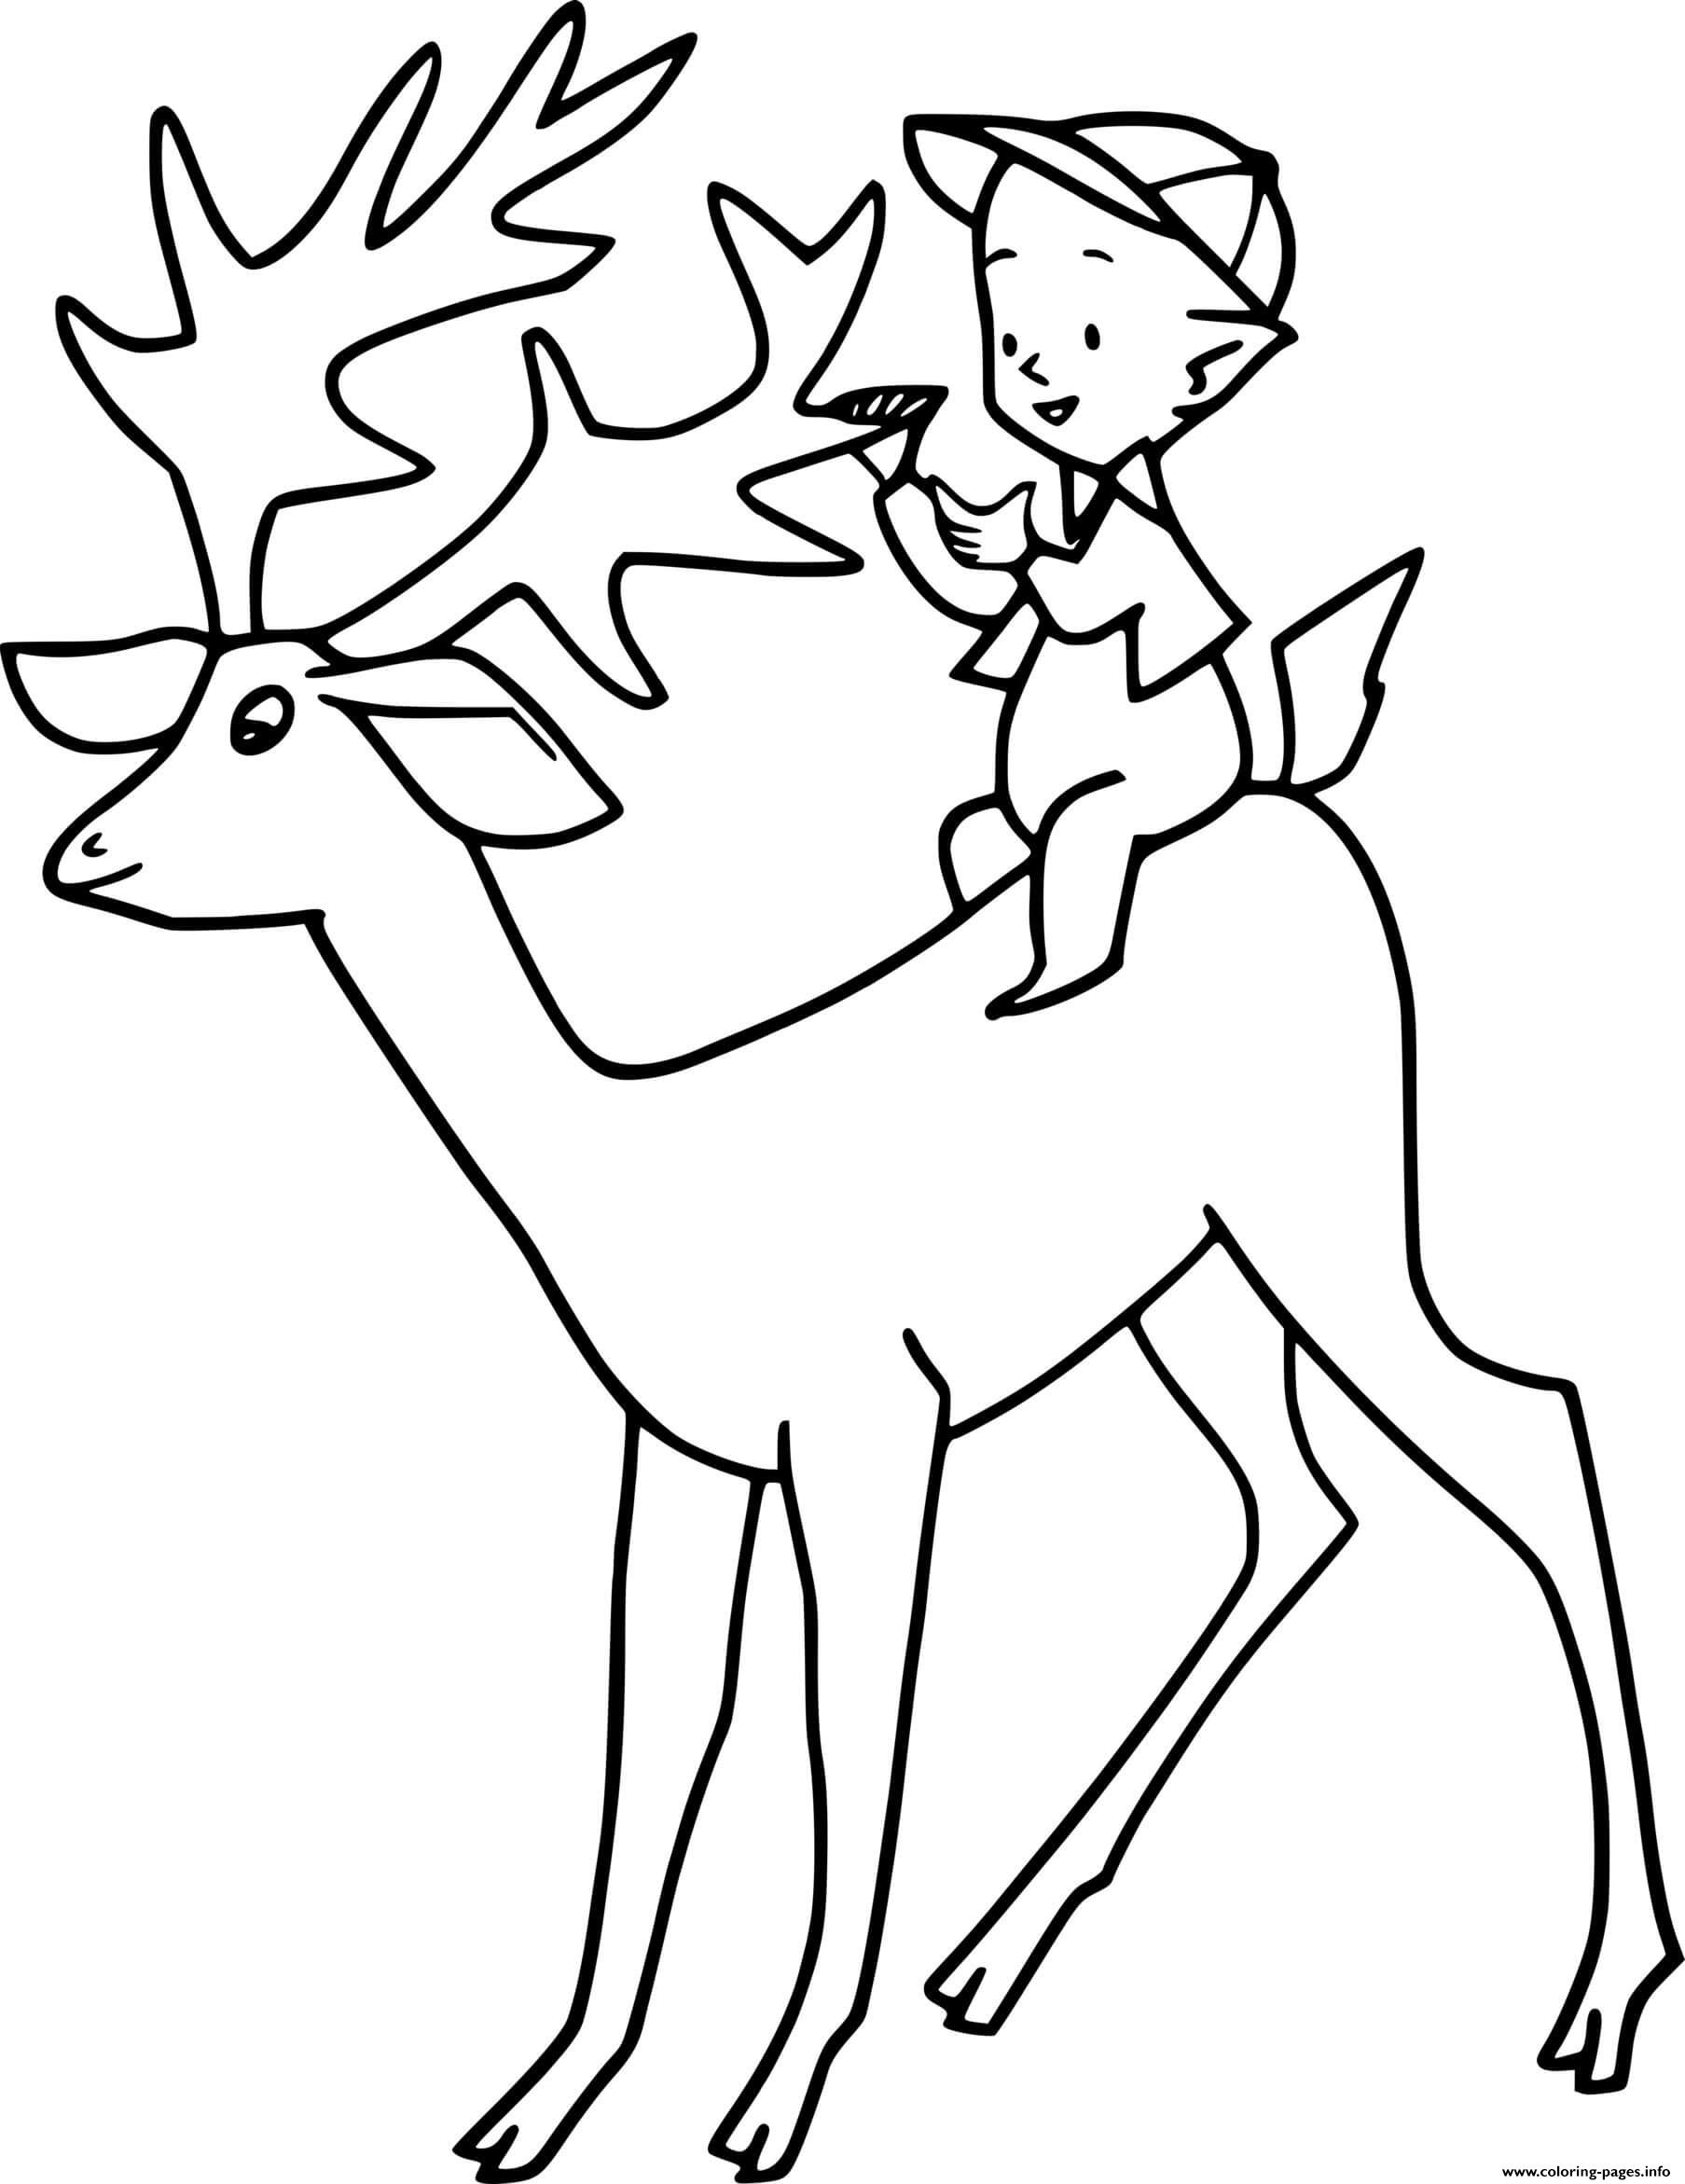 Elf Rides Reindeer coloring pages